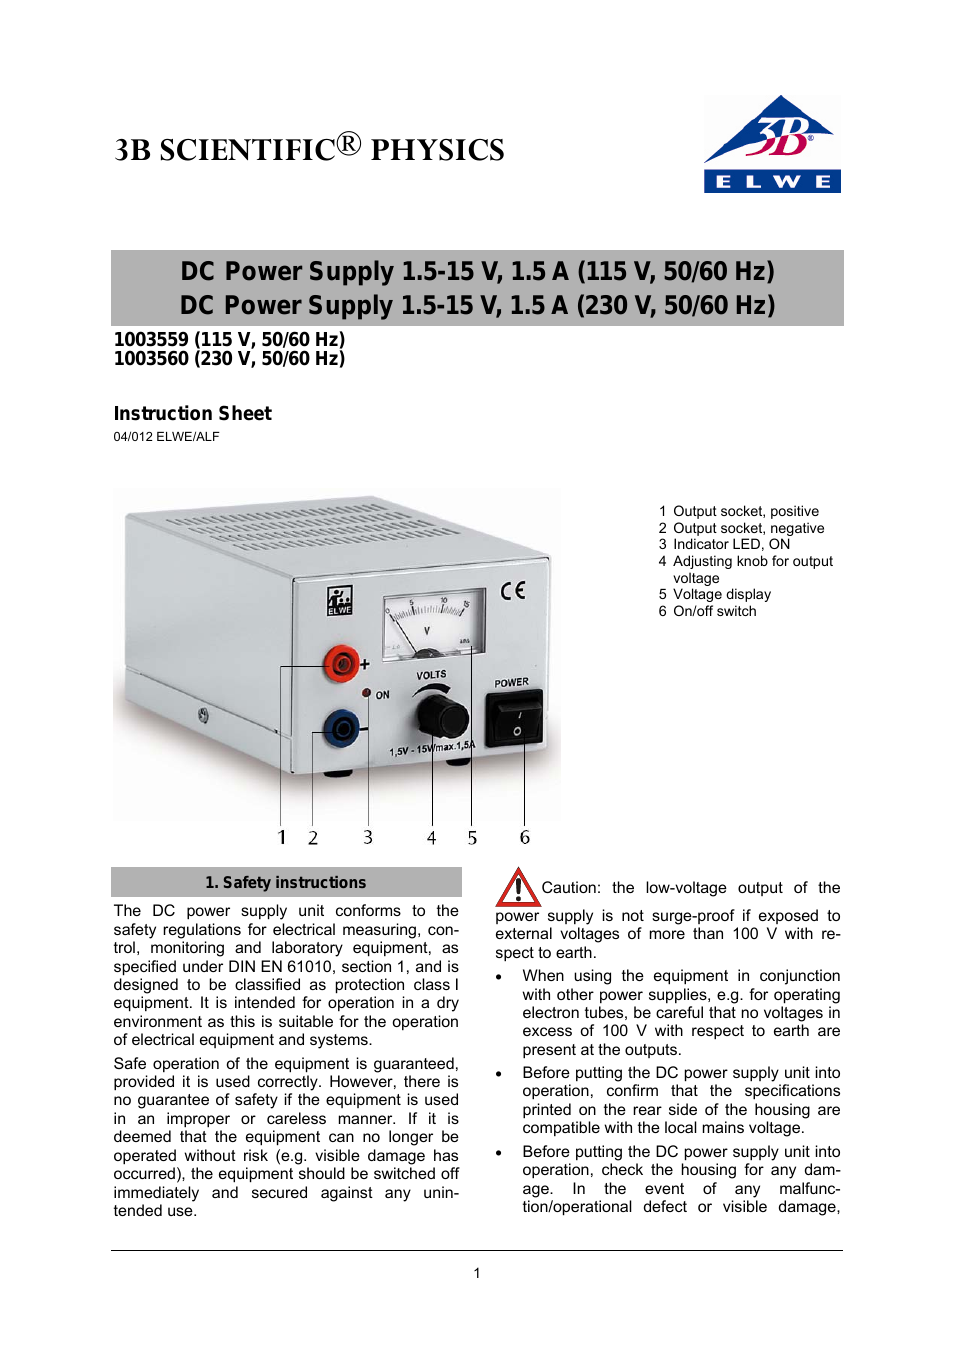 DC Power Supply 1.5-15 V, 1.5 A (230 V, 50__60 Hz)